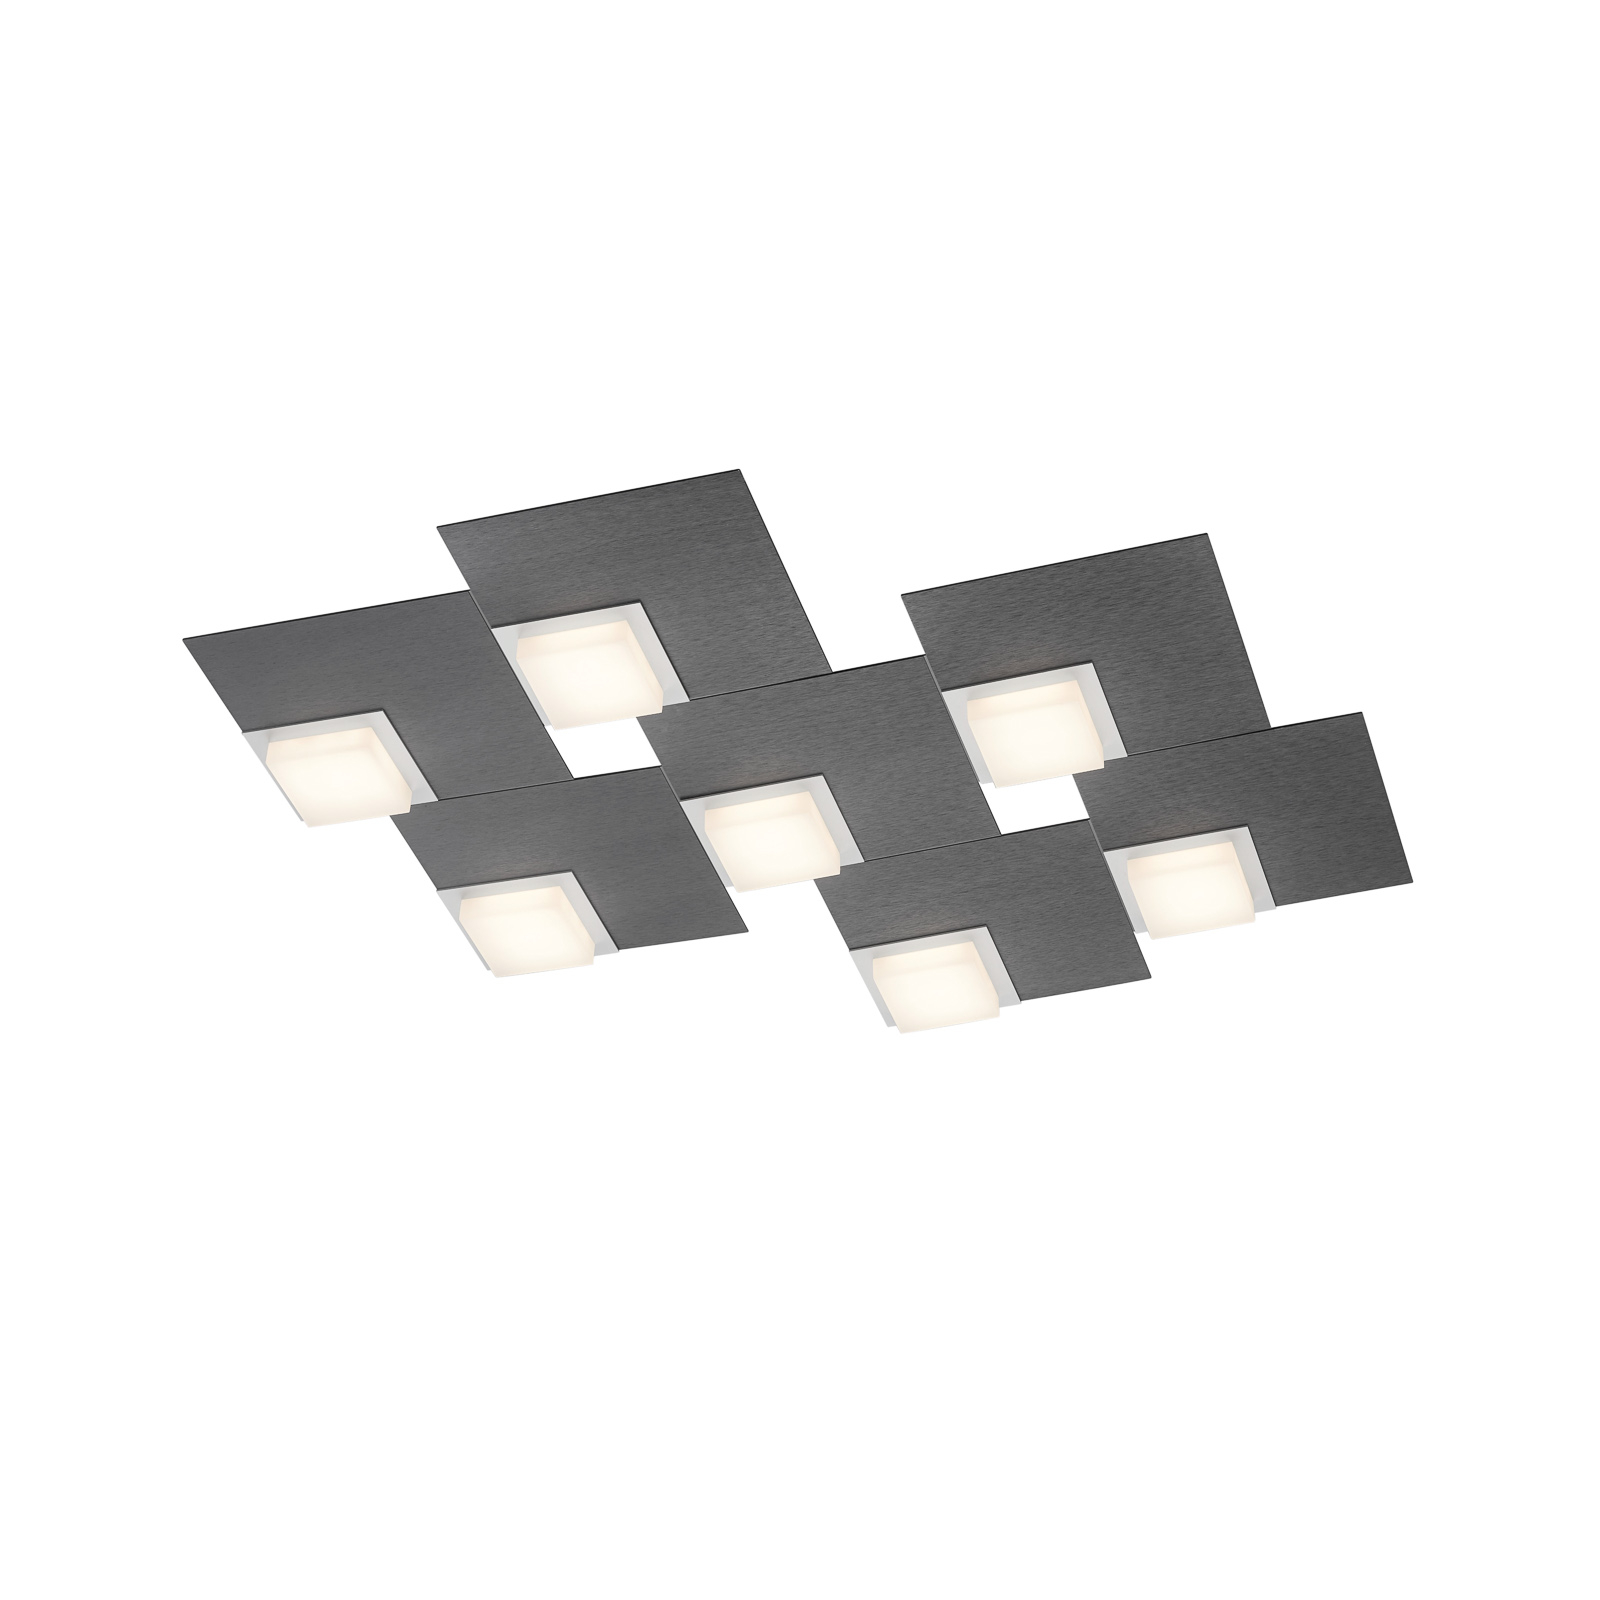 BANKAMP Quadro LED-taklampa 64 W, antracit